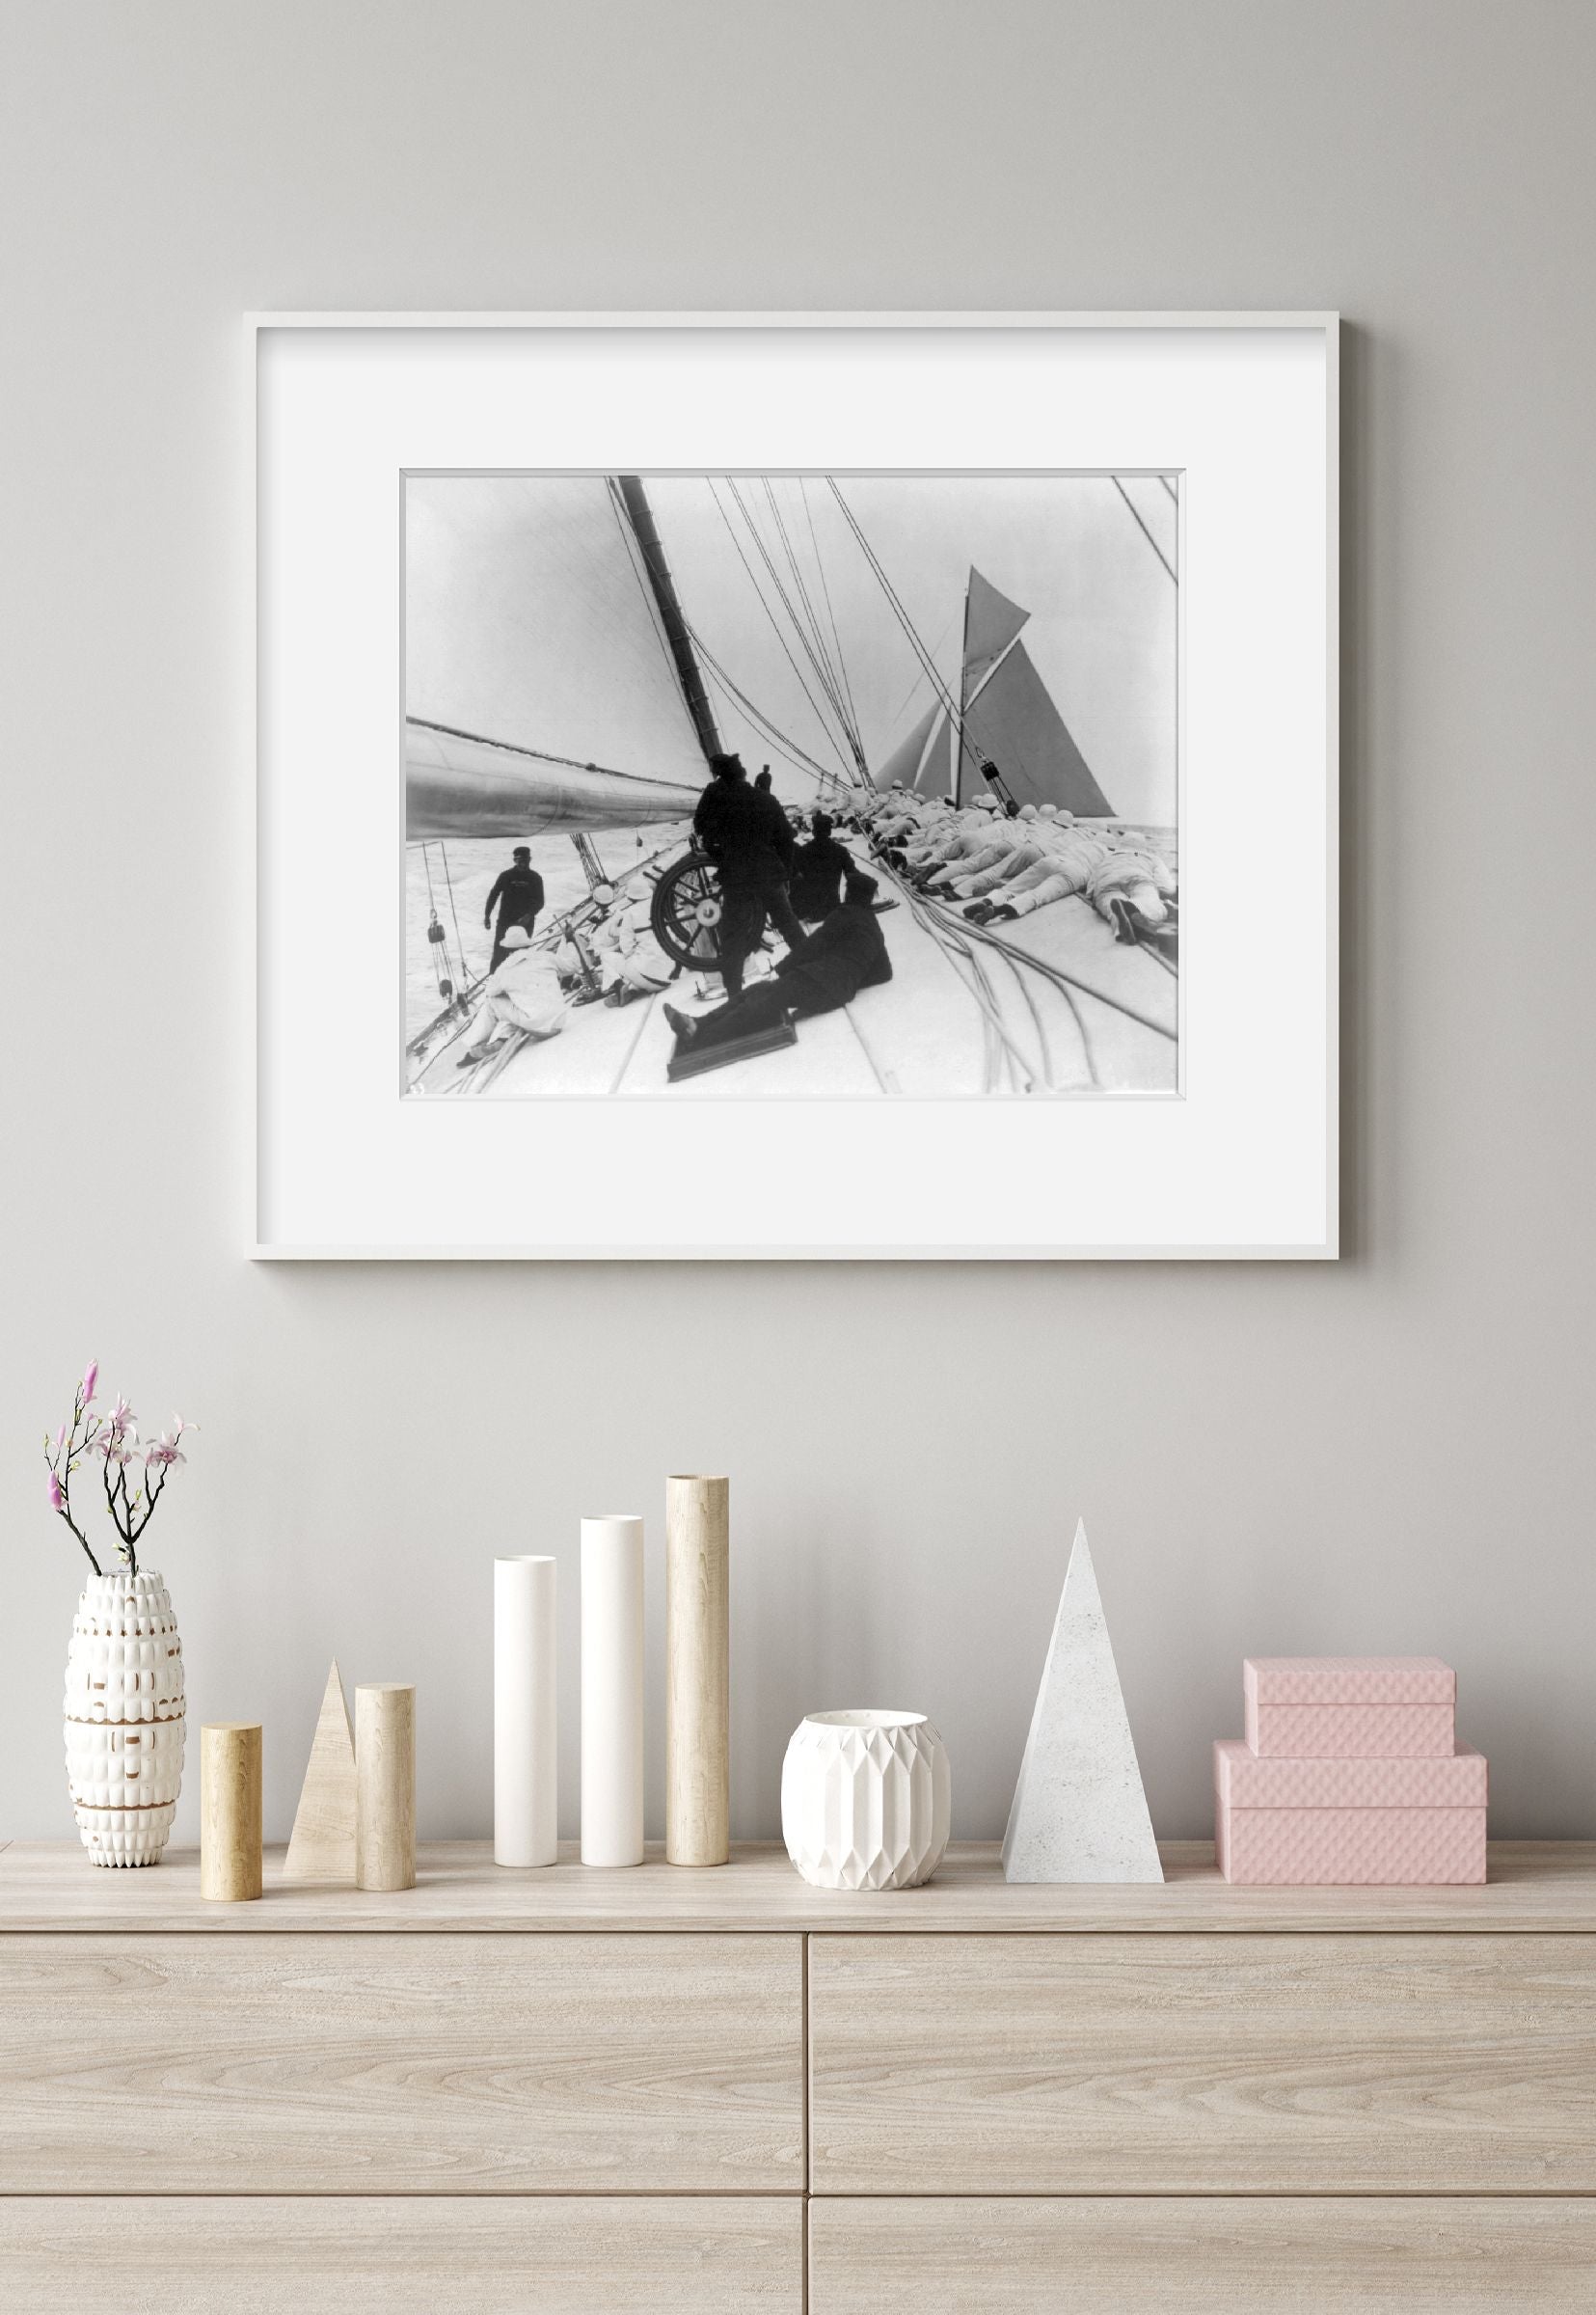 Photo: RELIANCE, sailing yacht, deck scene looking forward, c1903